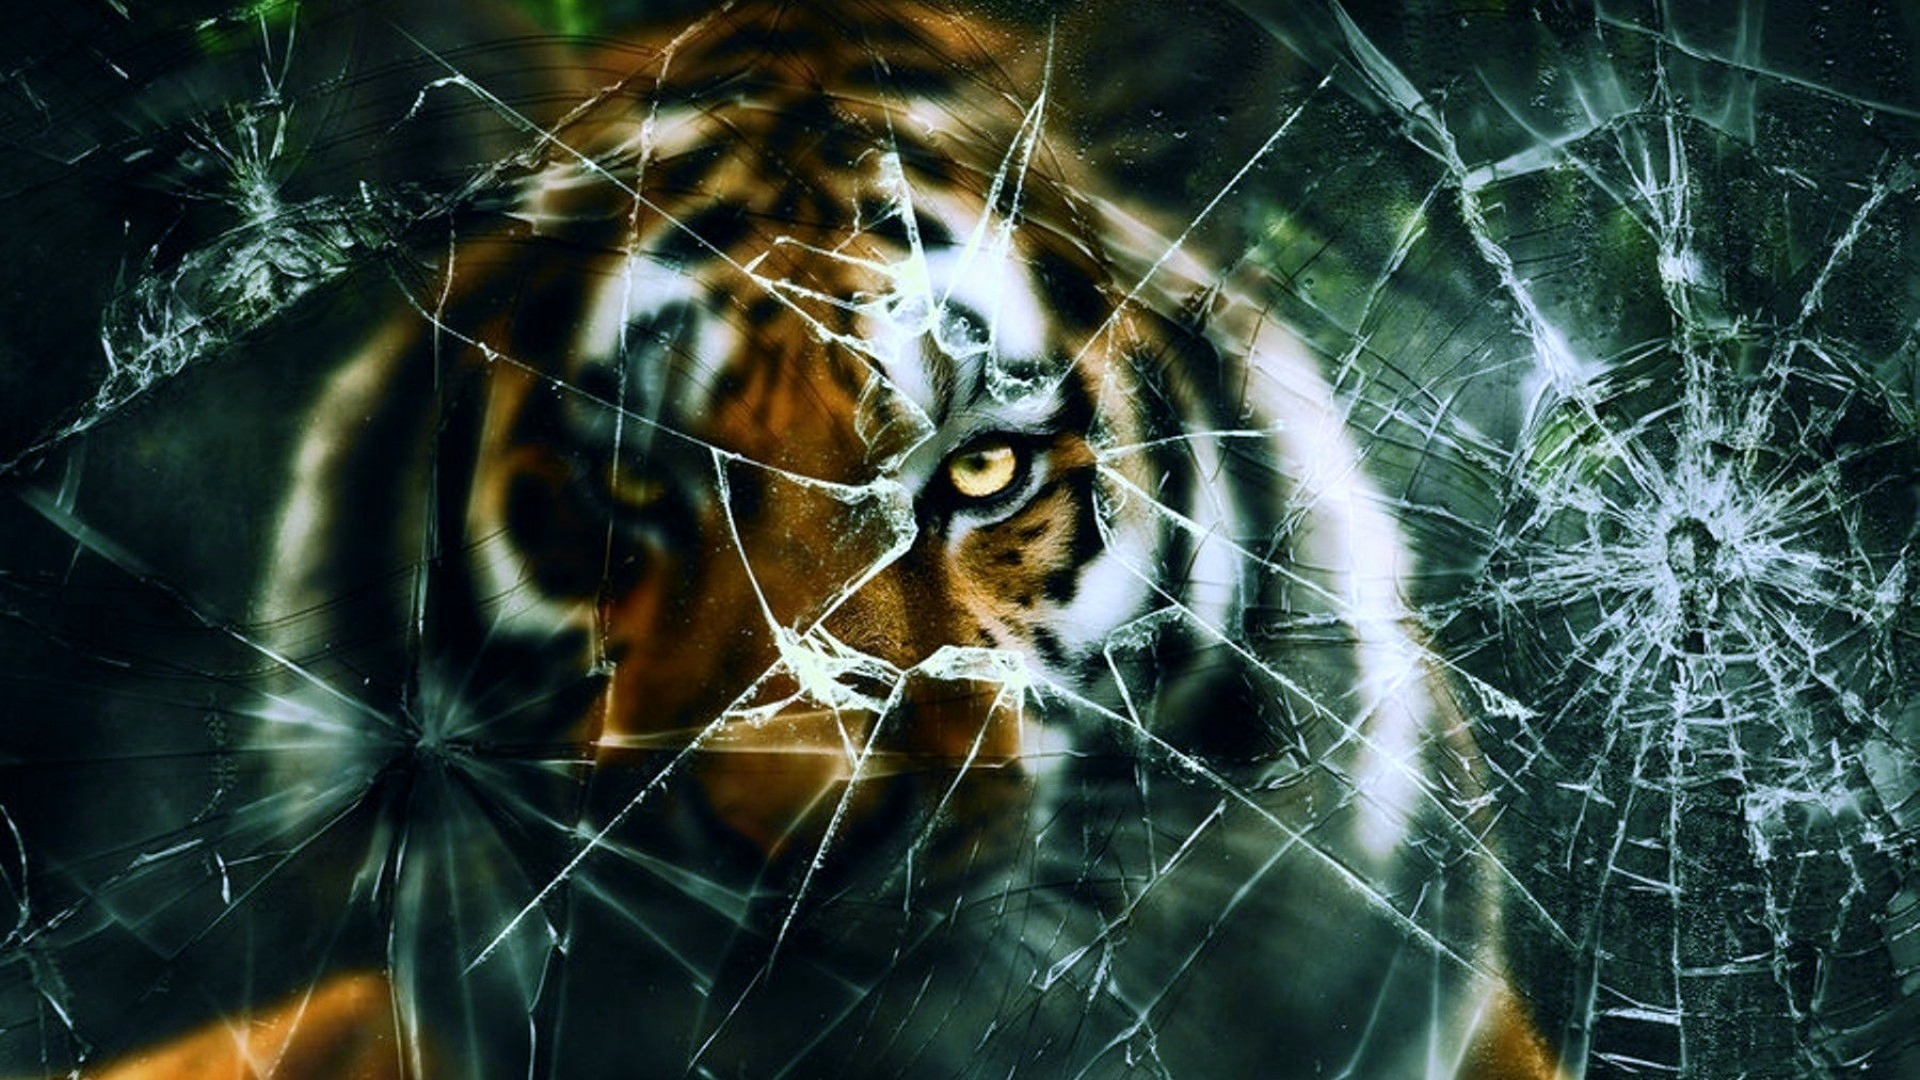 cracked screen wallpaper,bengal tiger,tiger,whiskers,felidae,wildlife